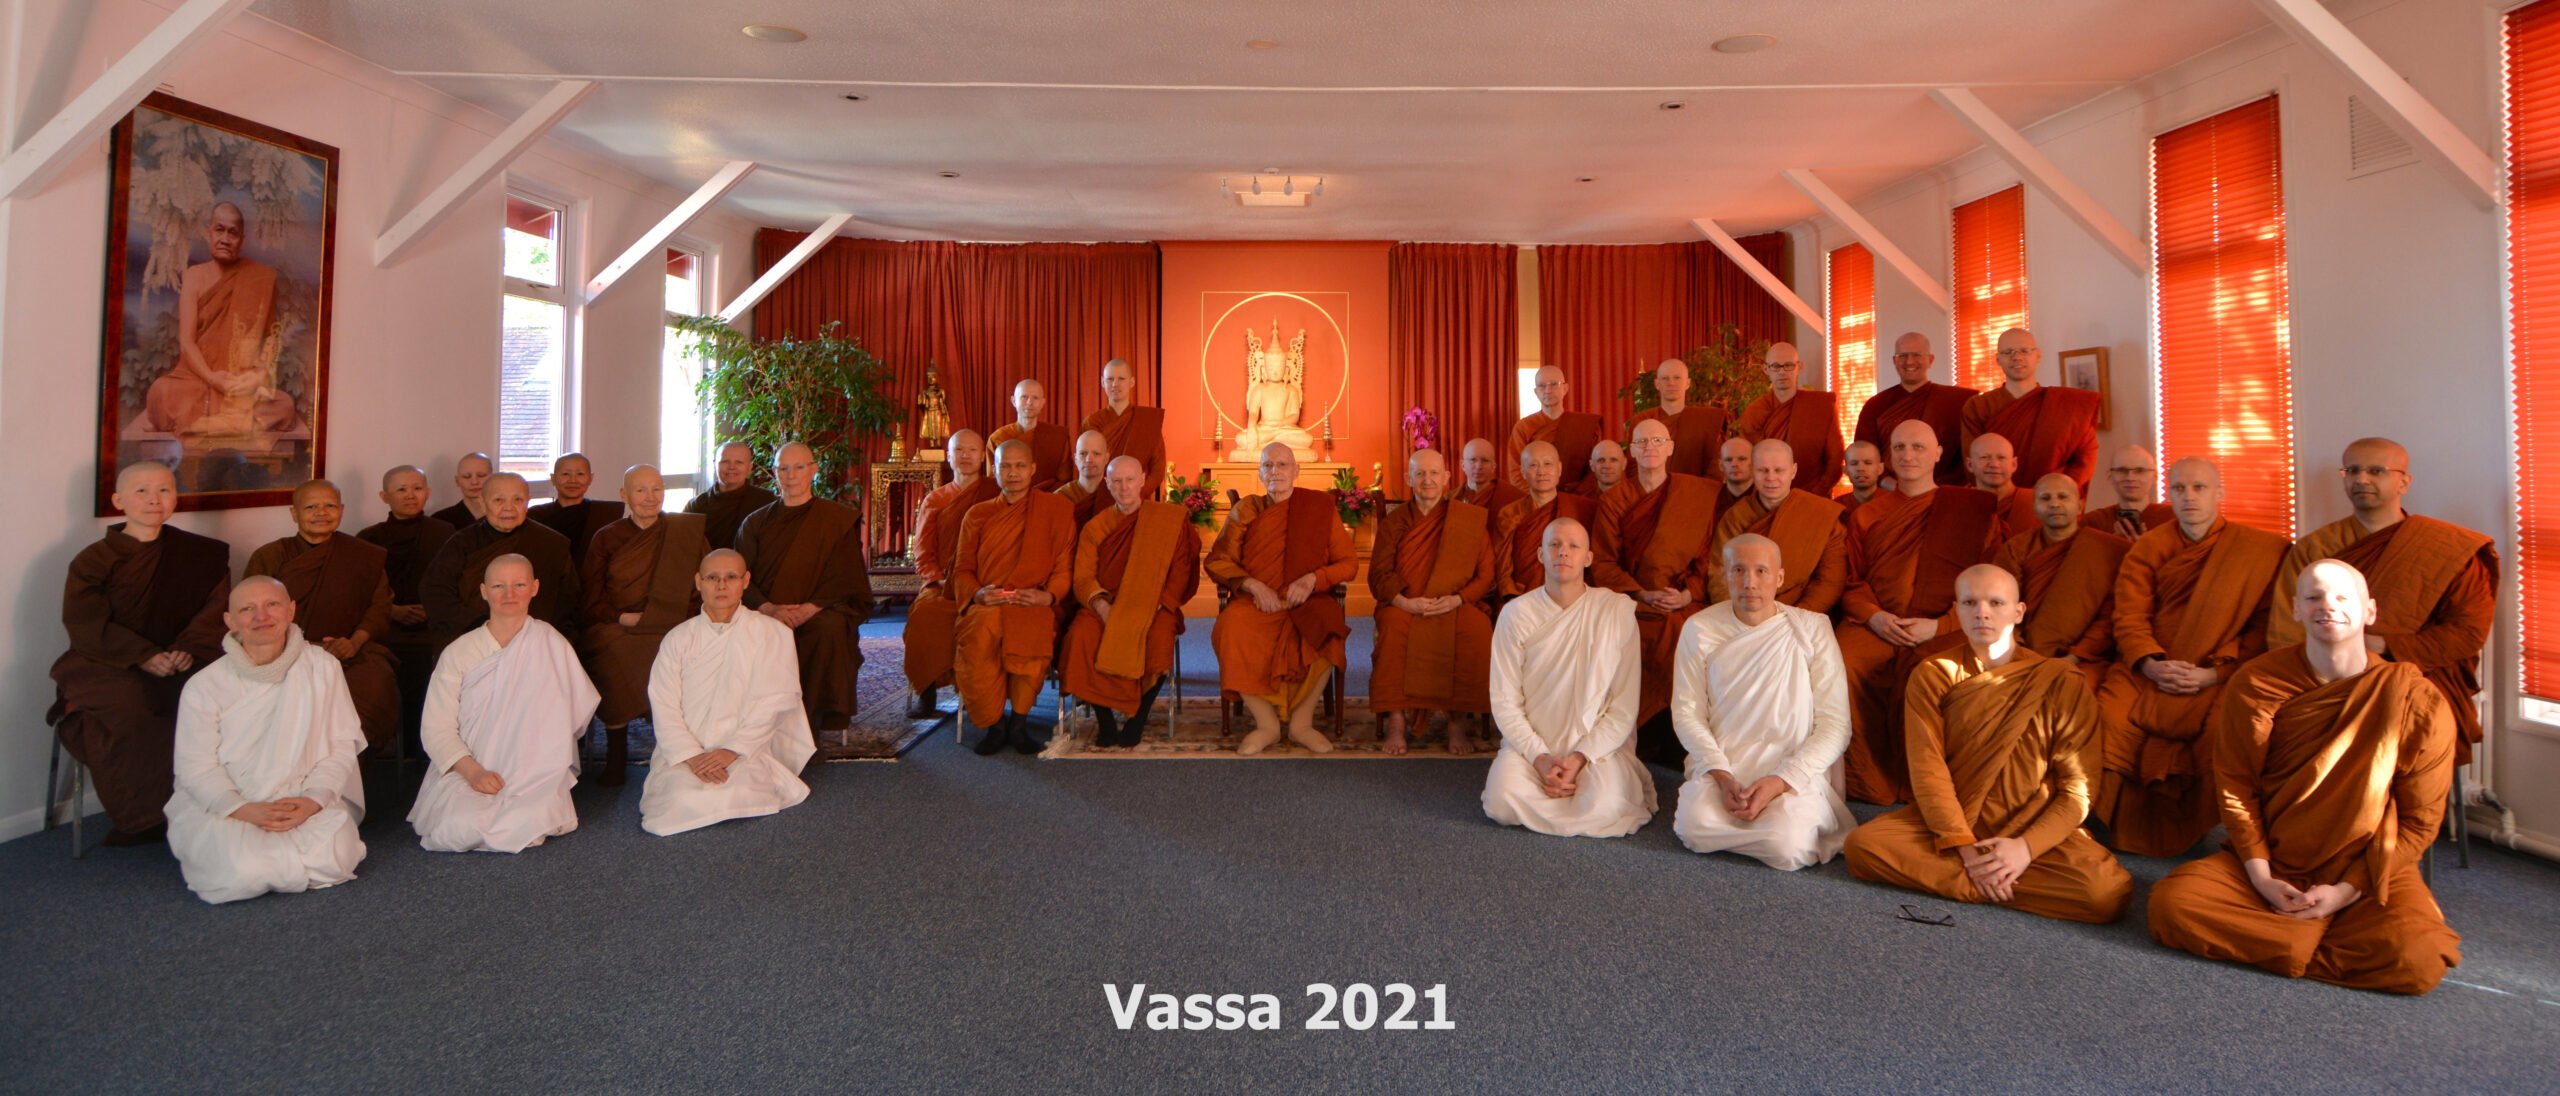 2021.10.21 Group photo Amaravati monastic community – Vassa 2021